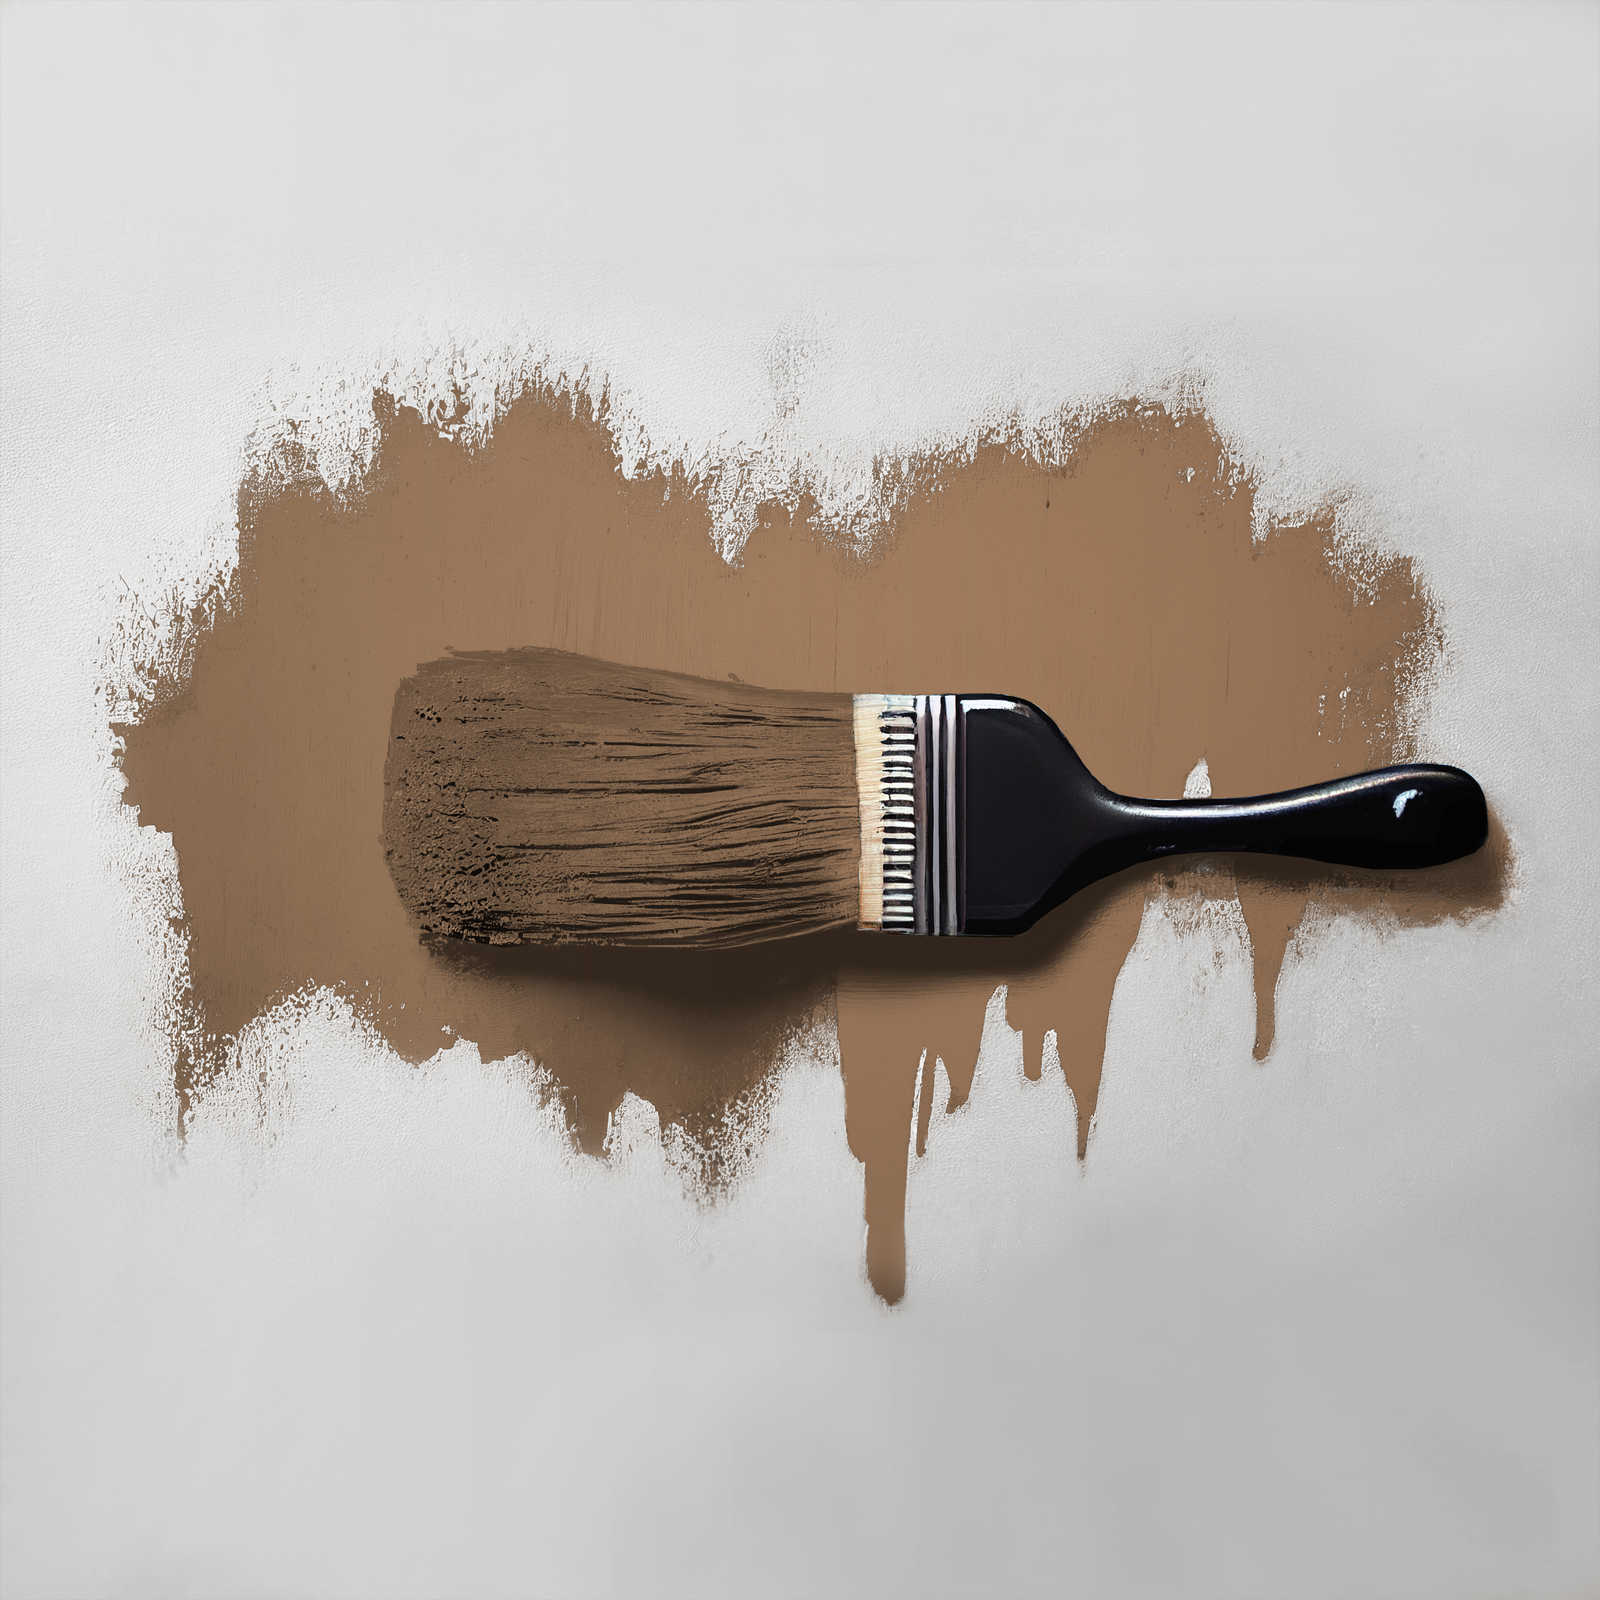             Wandfarbe in gemütlichem Braun »Awesome Anis« TCK6007 – 2,5 Liter
        